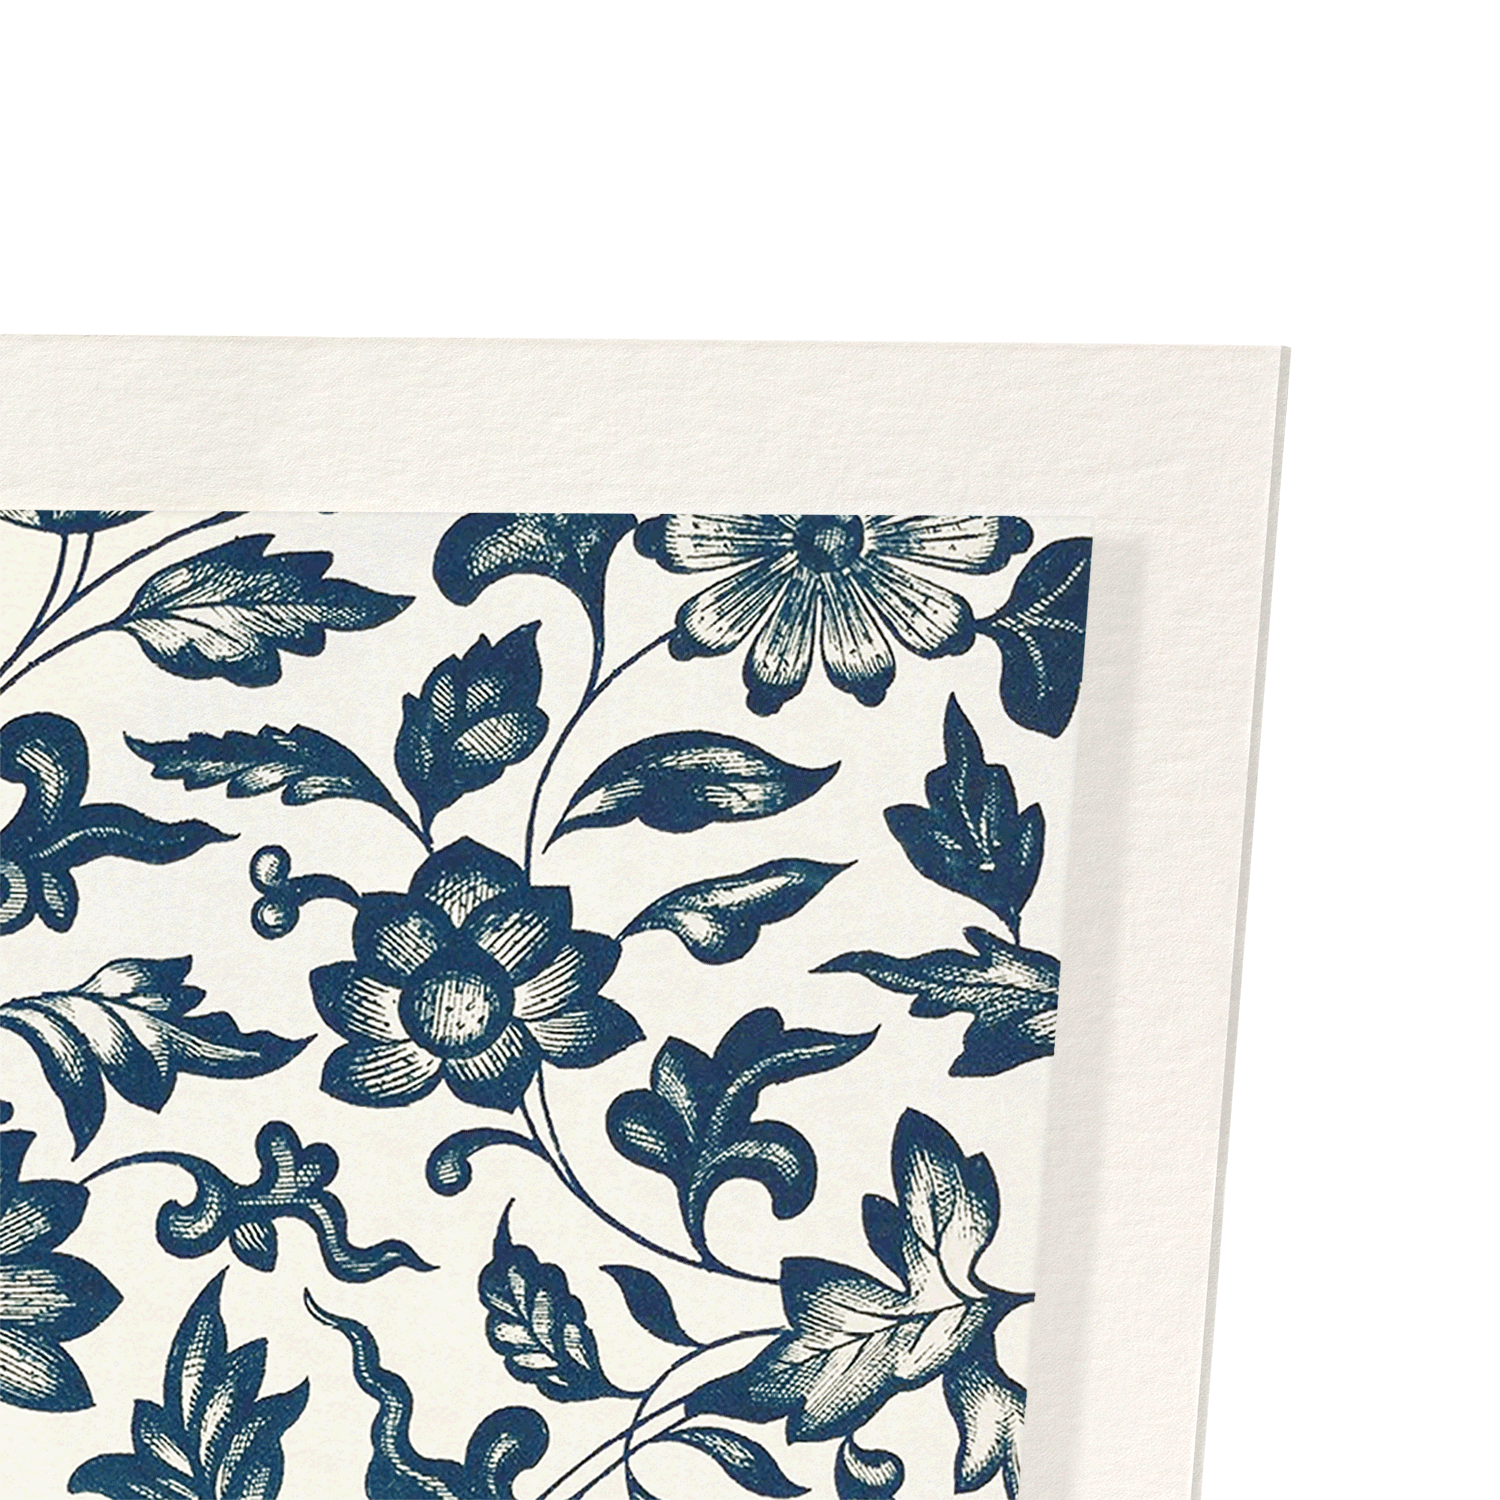 FLORAL BLUE AND WHITE MOTIF : Pattern Art Print